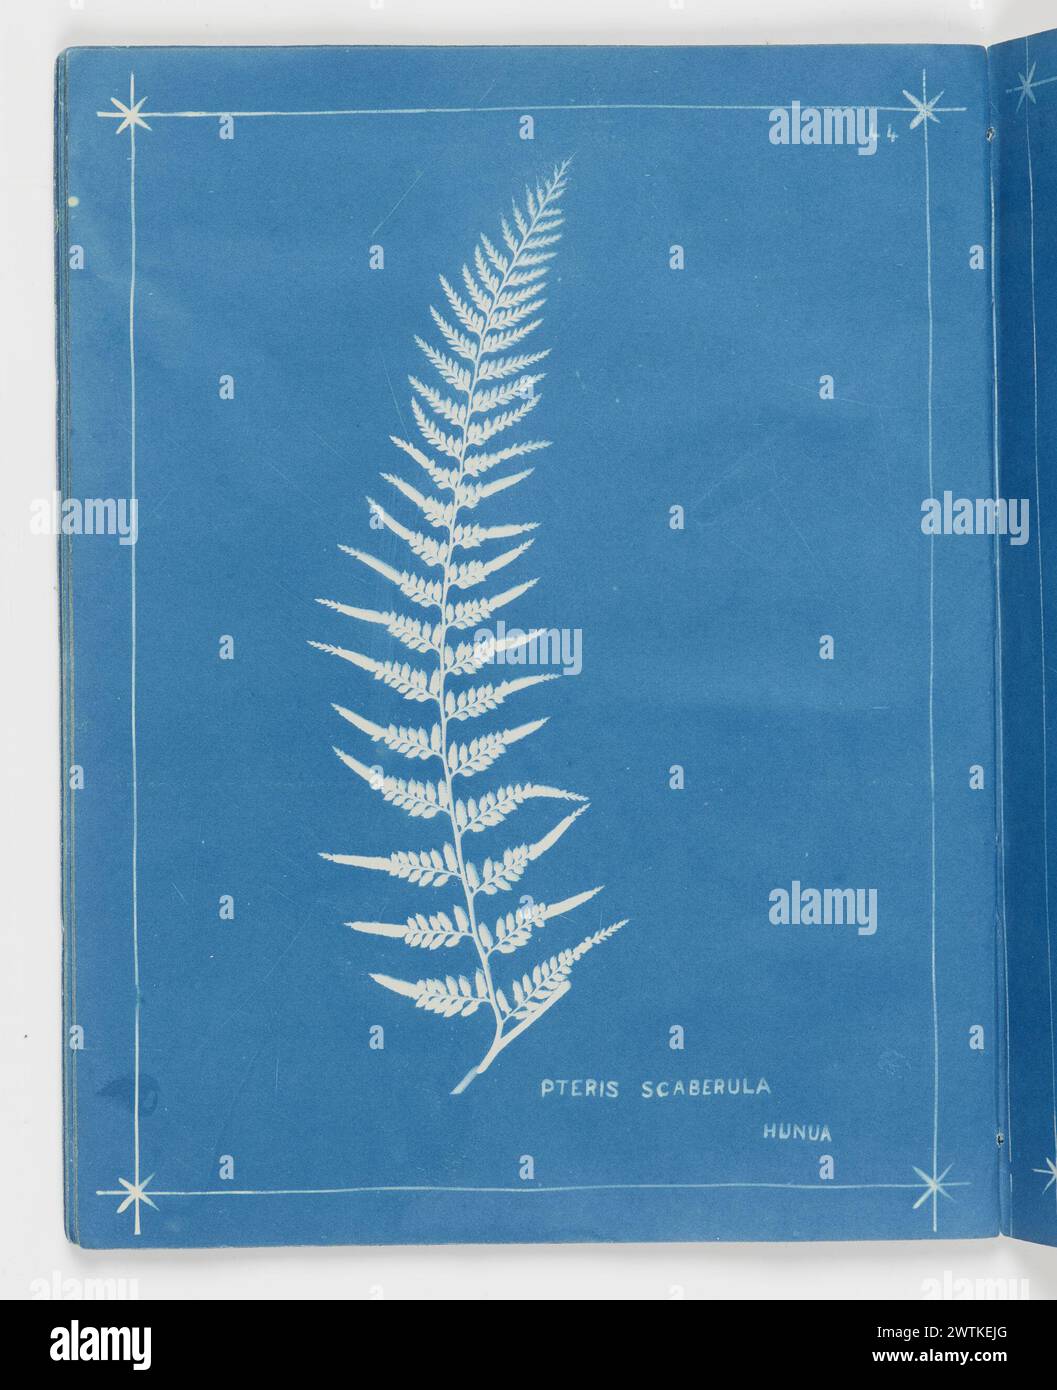 Pteris scaberula, Hunua. From the album: New Zealand ferns,148 varieties cyanotypes Stock Photo